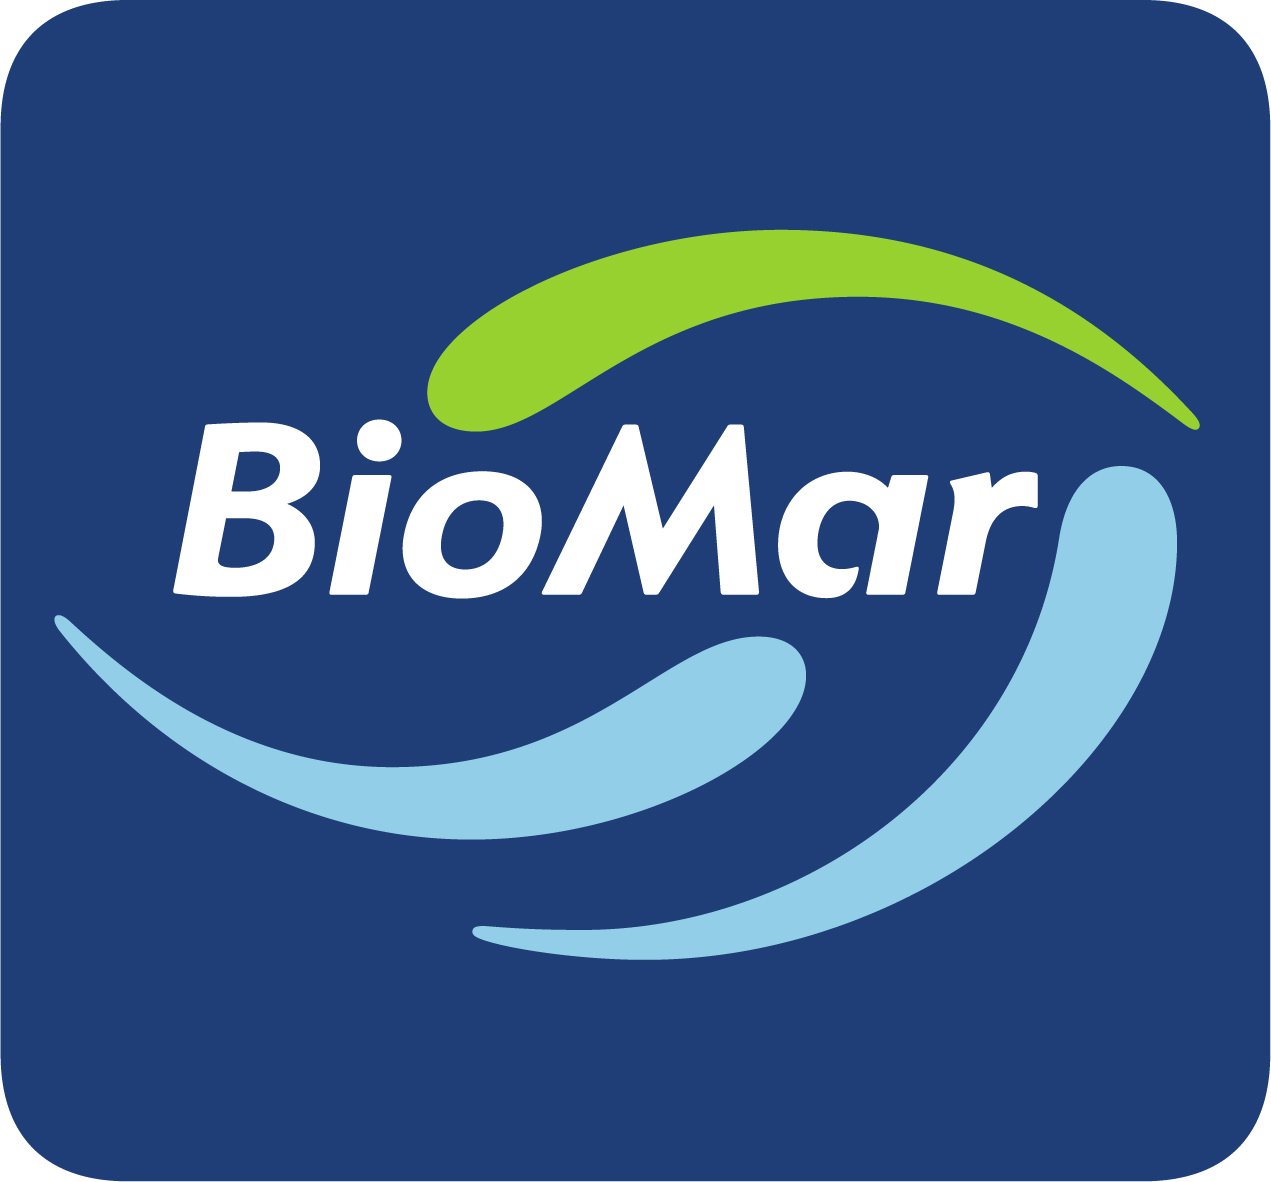 Biomar logo RGB-01